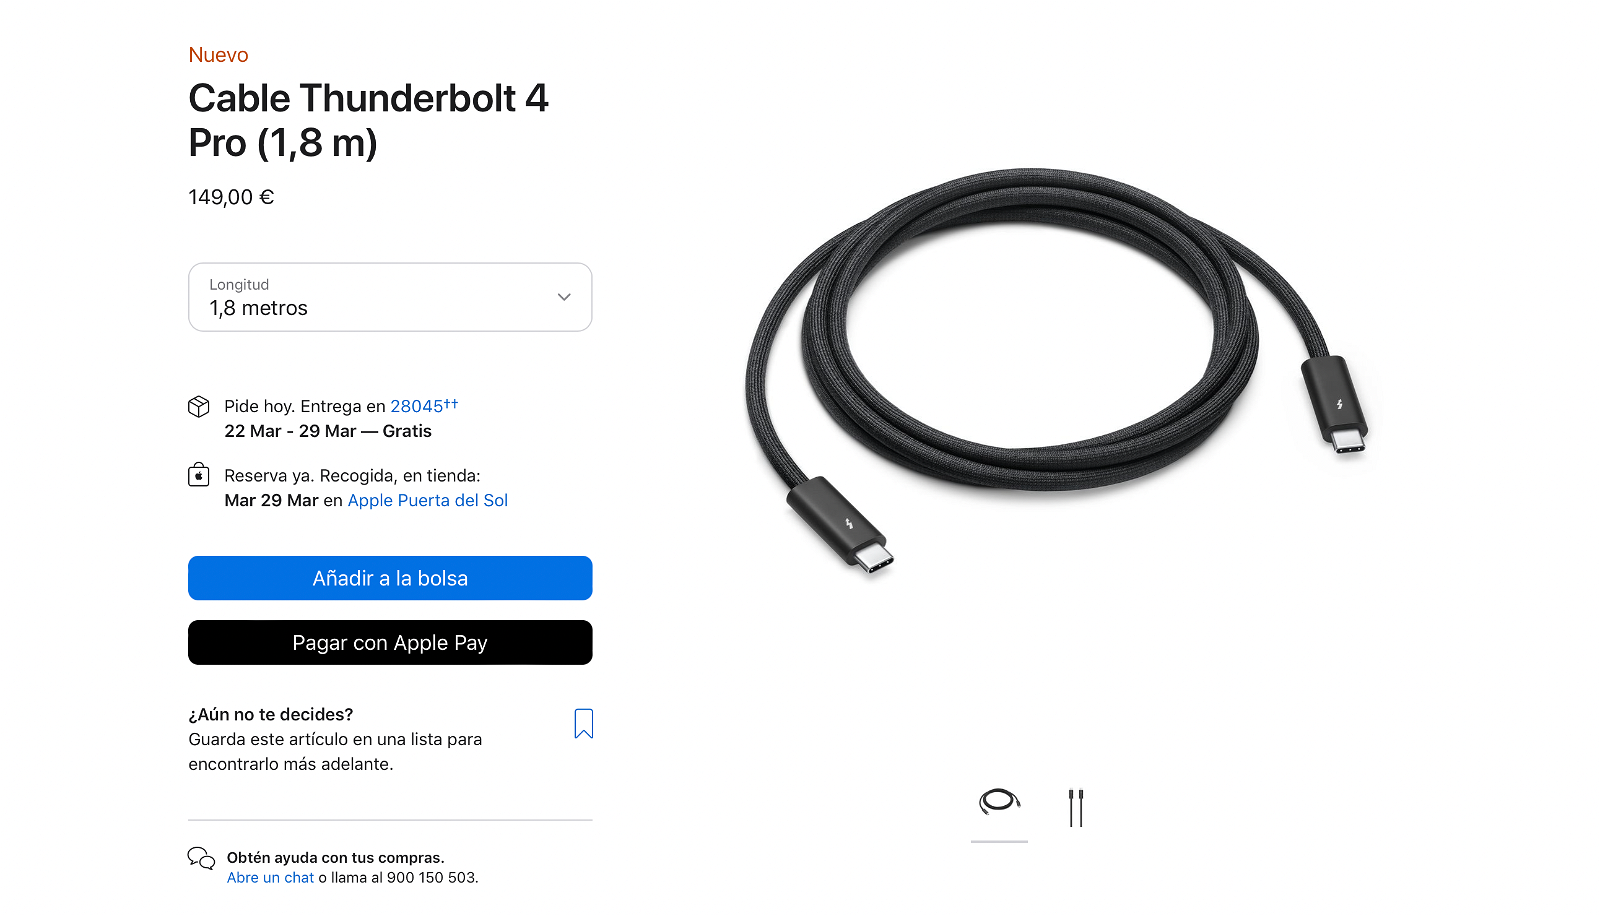 Precio del cable Thunderbolt 4 de Apple